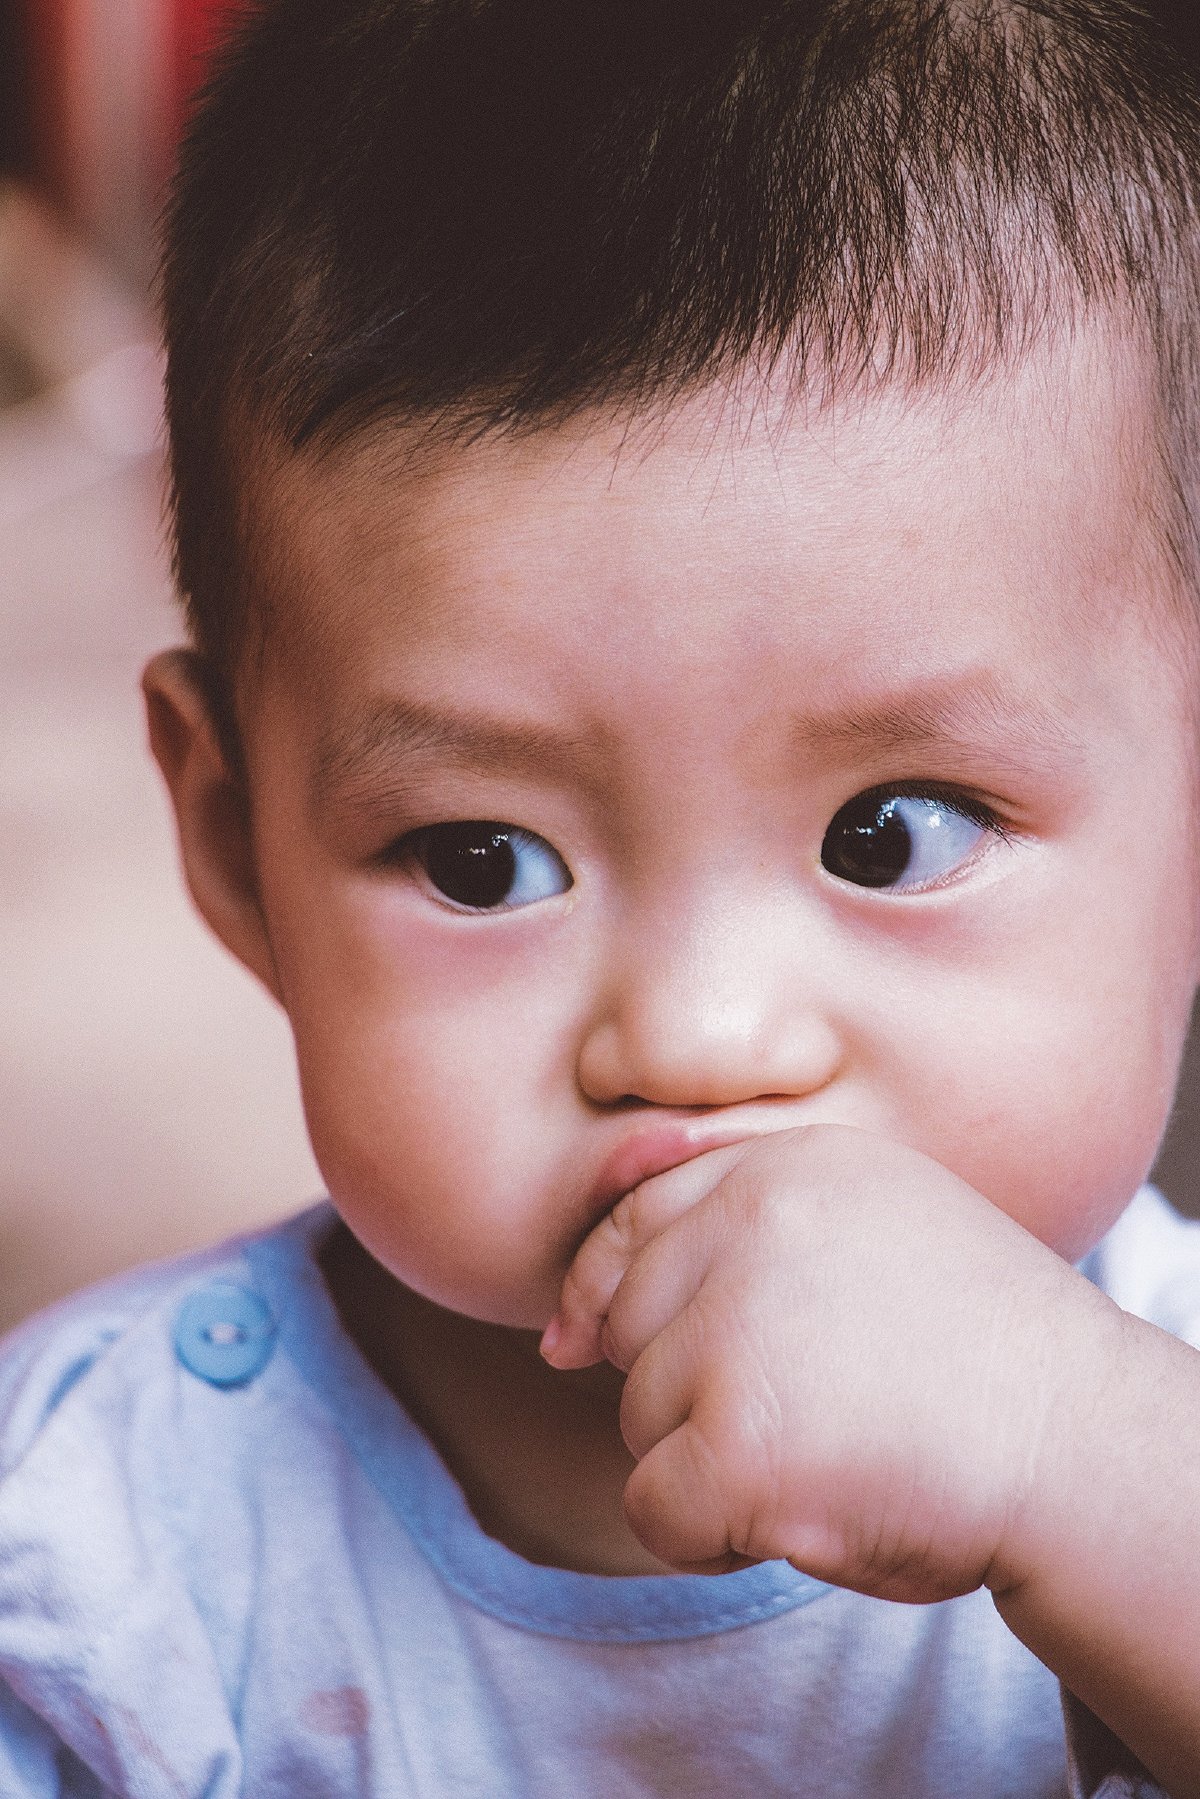 PENJAGAAN gigi pada peringkat awal bayi amat penting untuk si kecil bebas jangkitan.